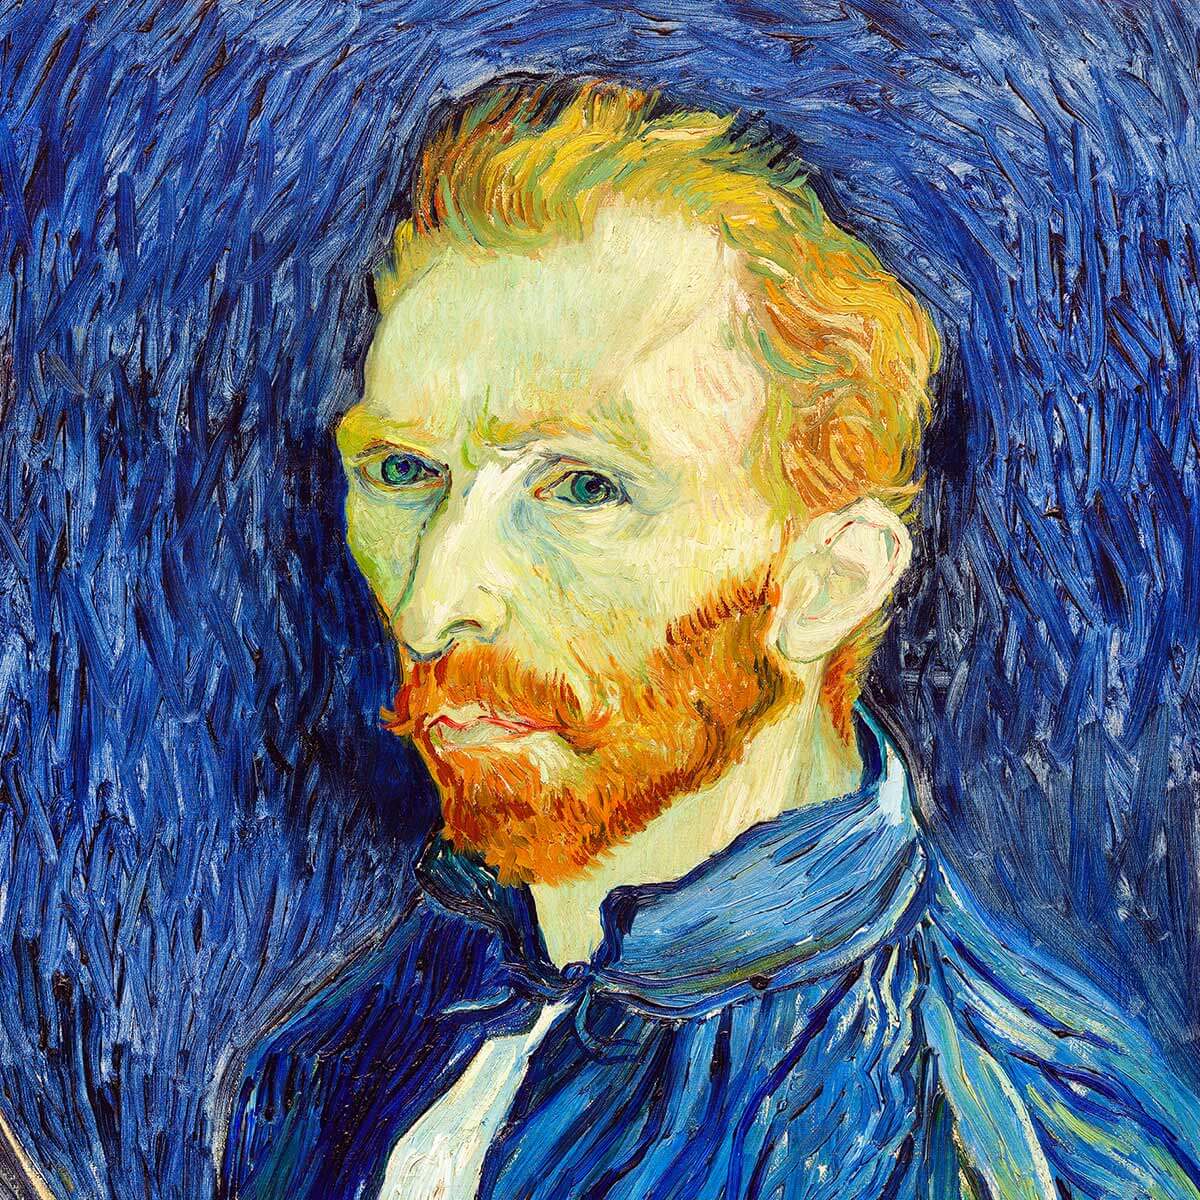 Vincent van Gogh: The Tortured Genius Behind the Masterpieces